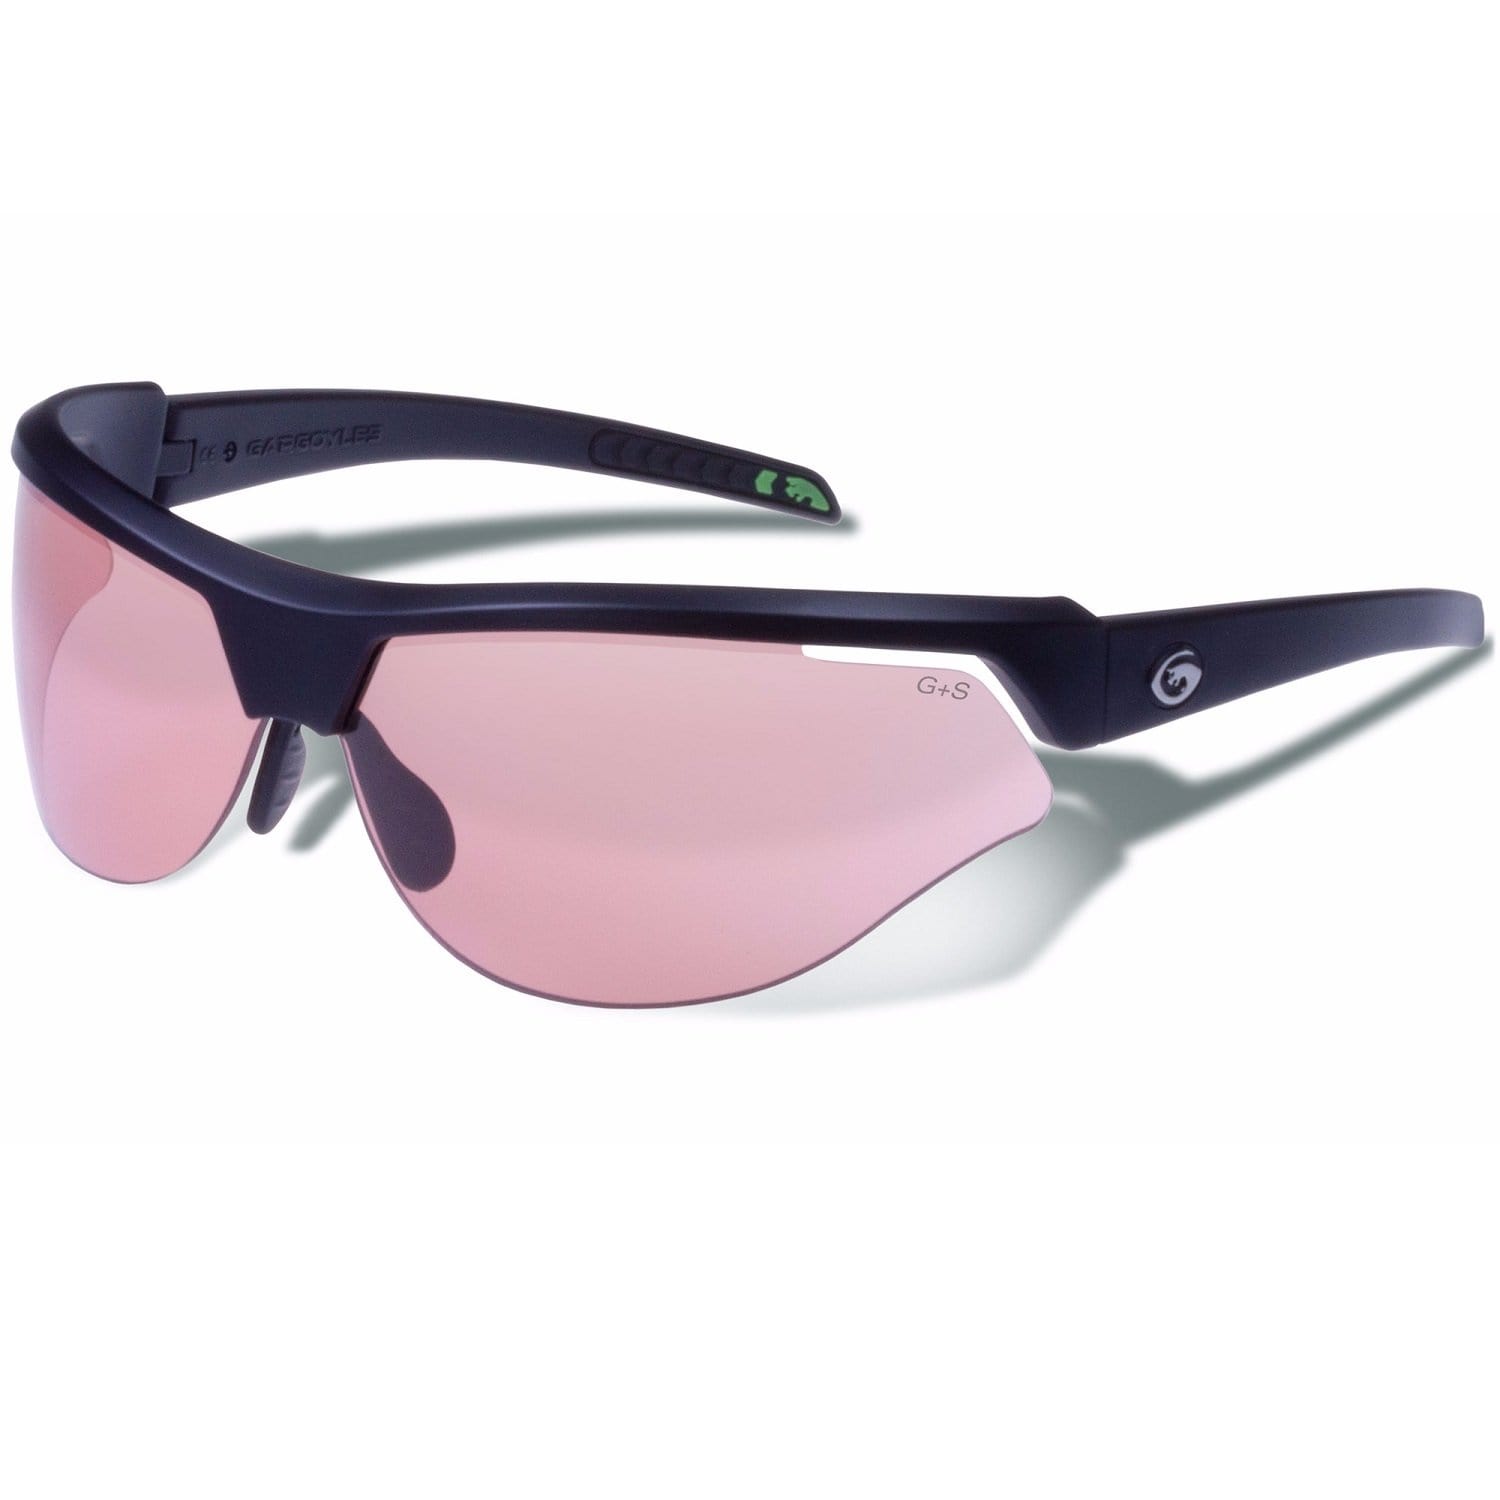 Gargoyles Apparel : Eyewear - Safety/Shooting Gargoyles Cardinal Performance Sunglasses- Rose Lenses